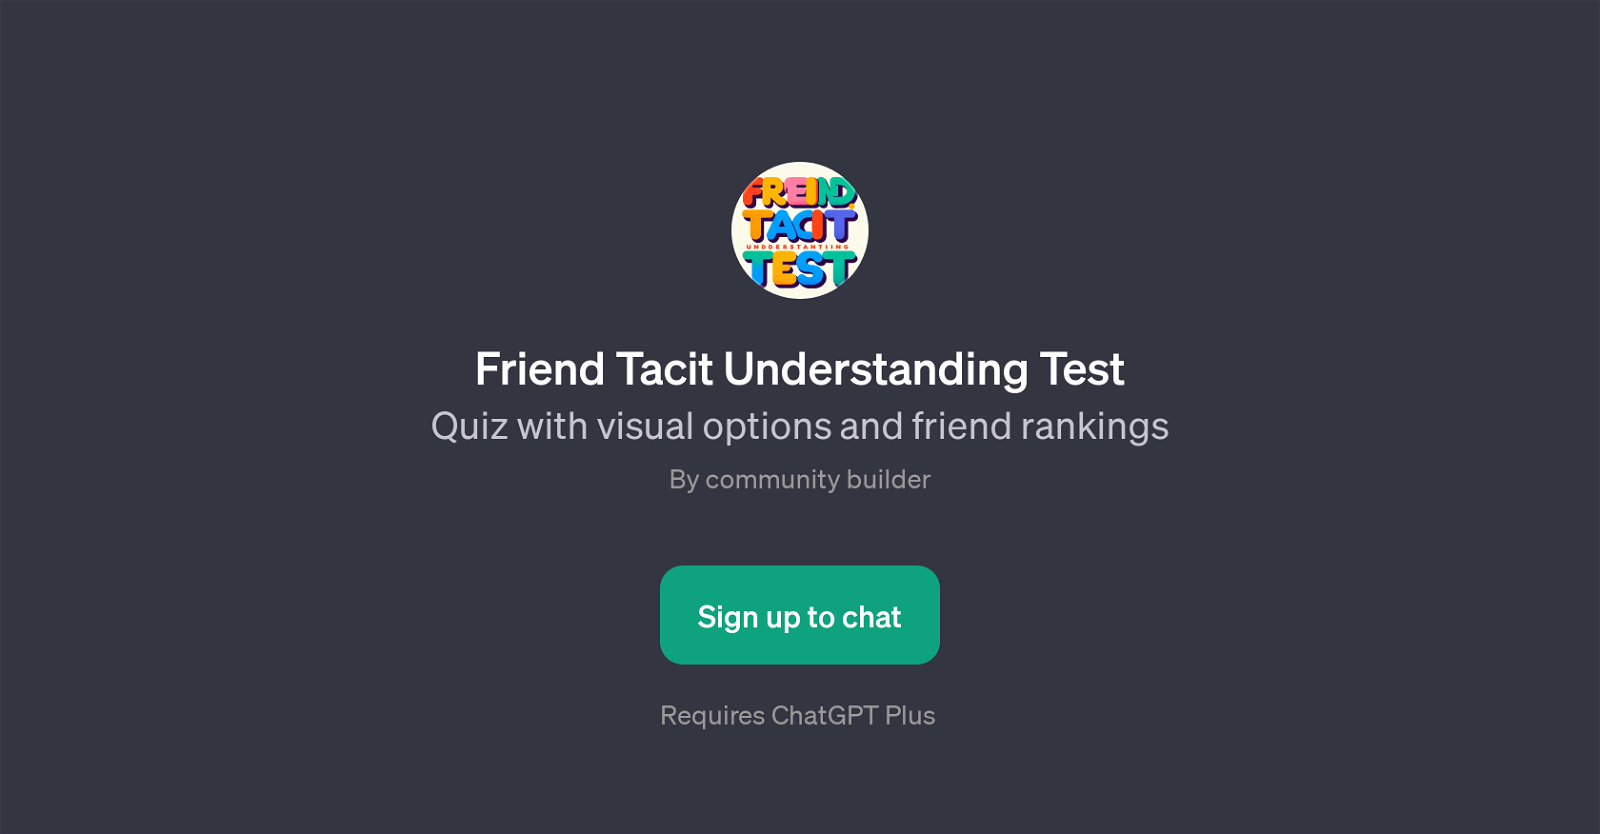 Friend Tacit Understanding Test website